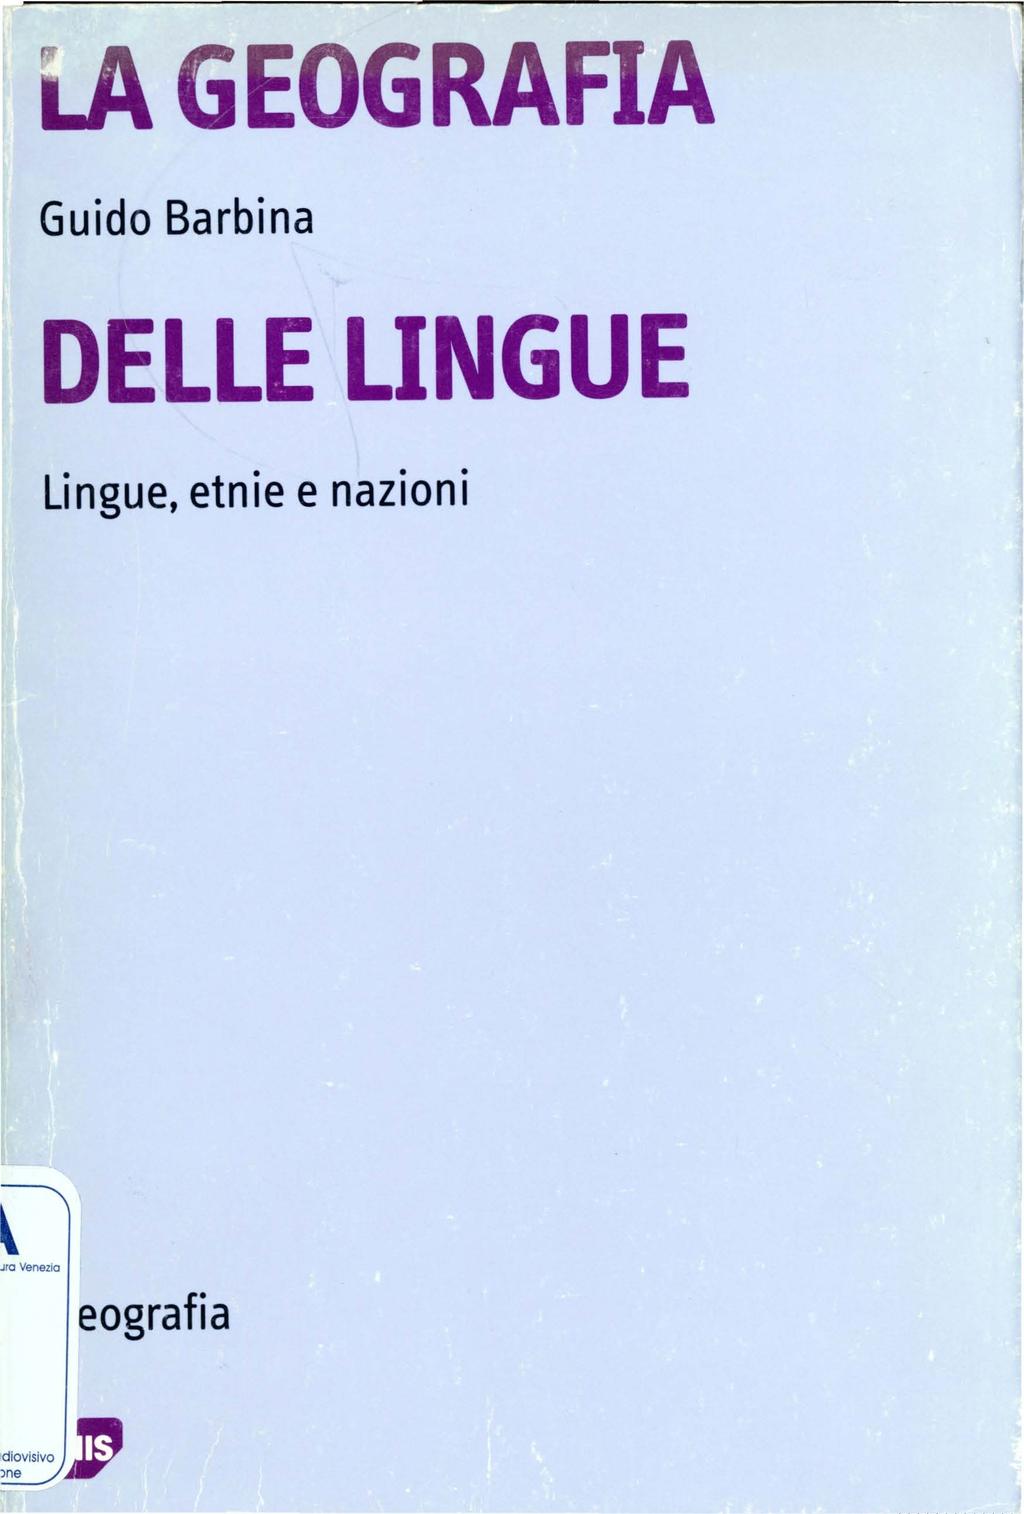 EOGRAFA Guido Barbina DELLE LNGUE Lingue, etnie